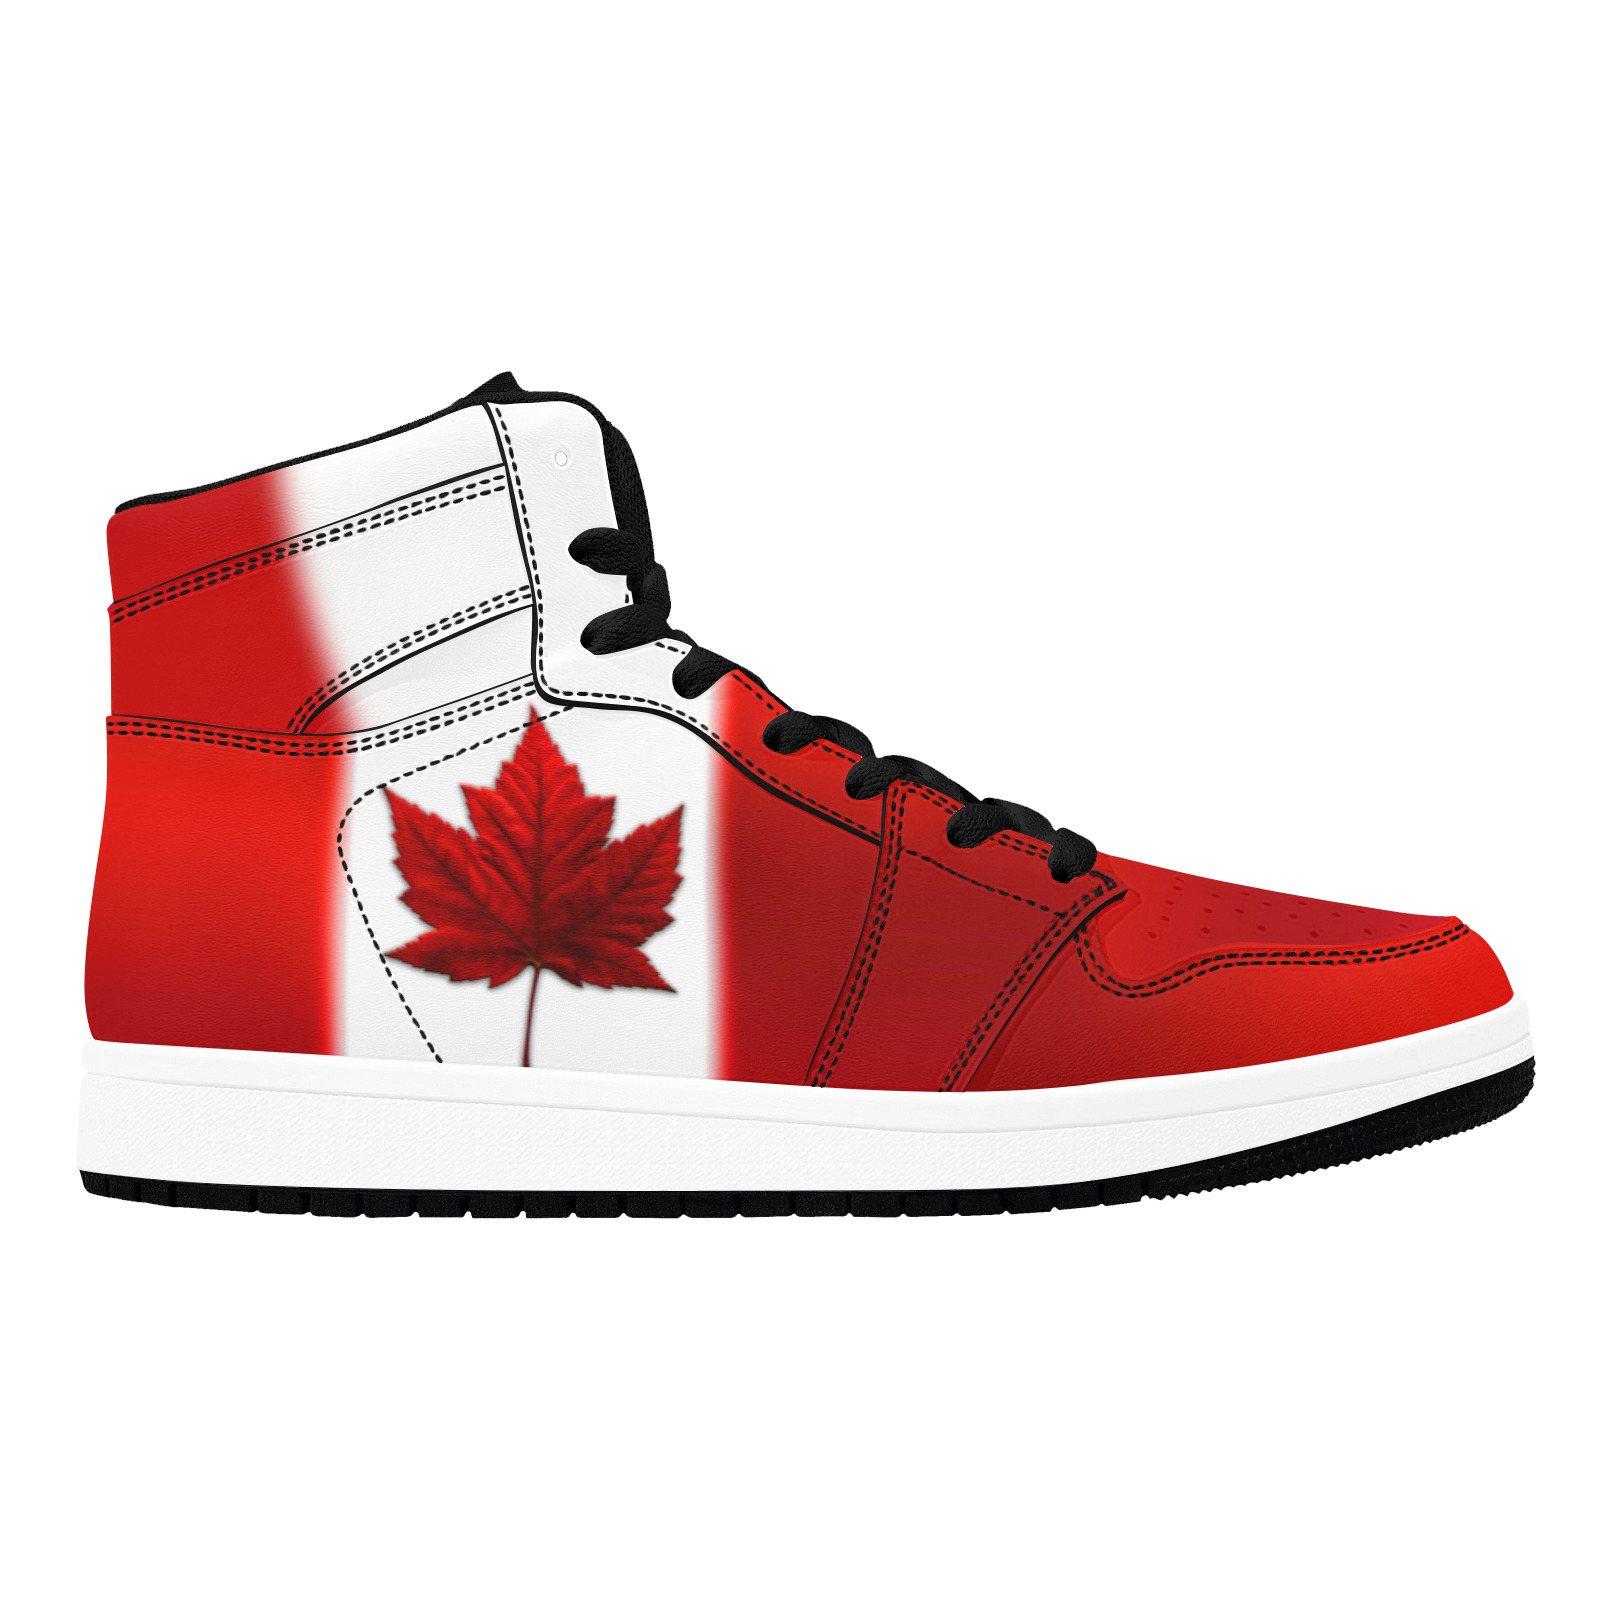 Canada Flag Sneakers Running Shoes Men's High Top Sneakers (Model 20042)